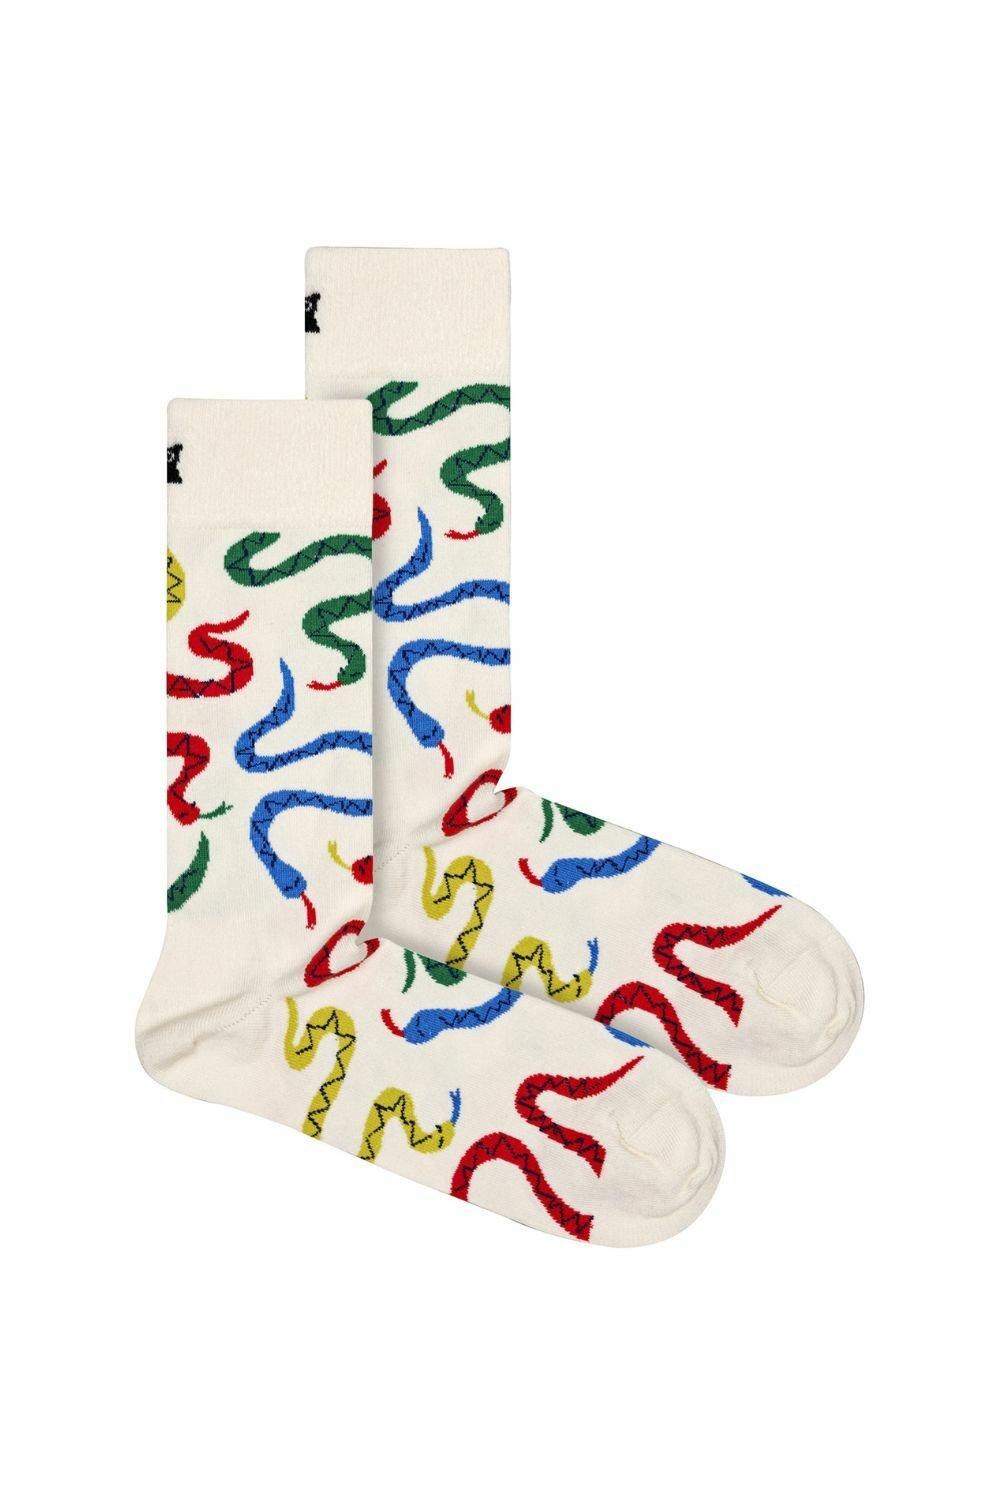 Novelty Snakes Design Soft Breathable Cotton Socks - Great Gift